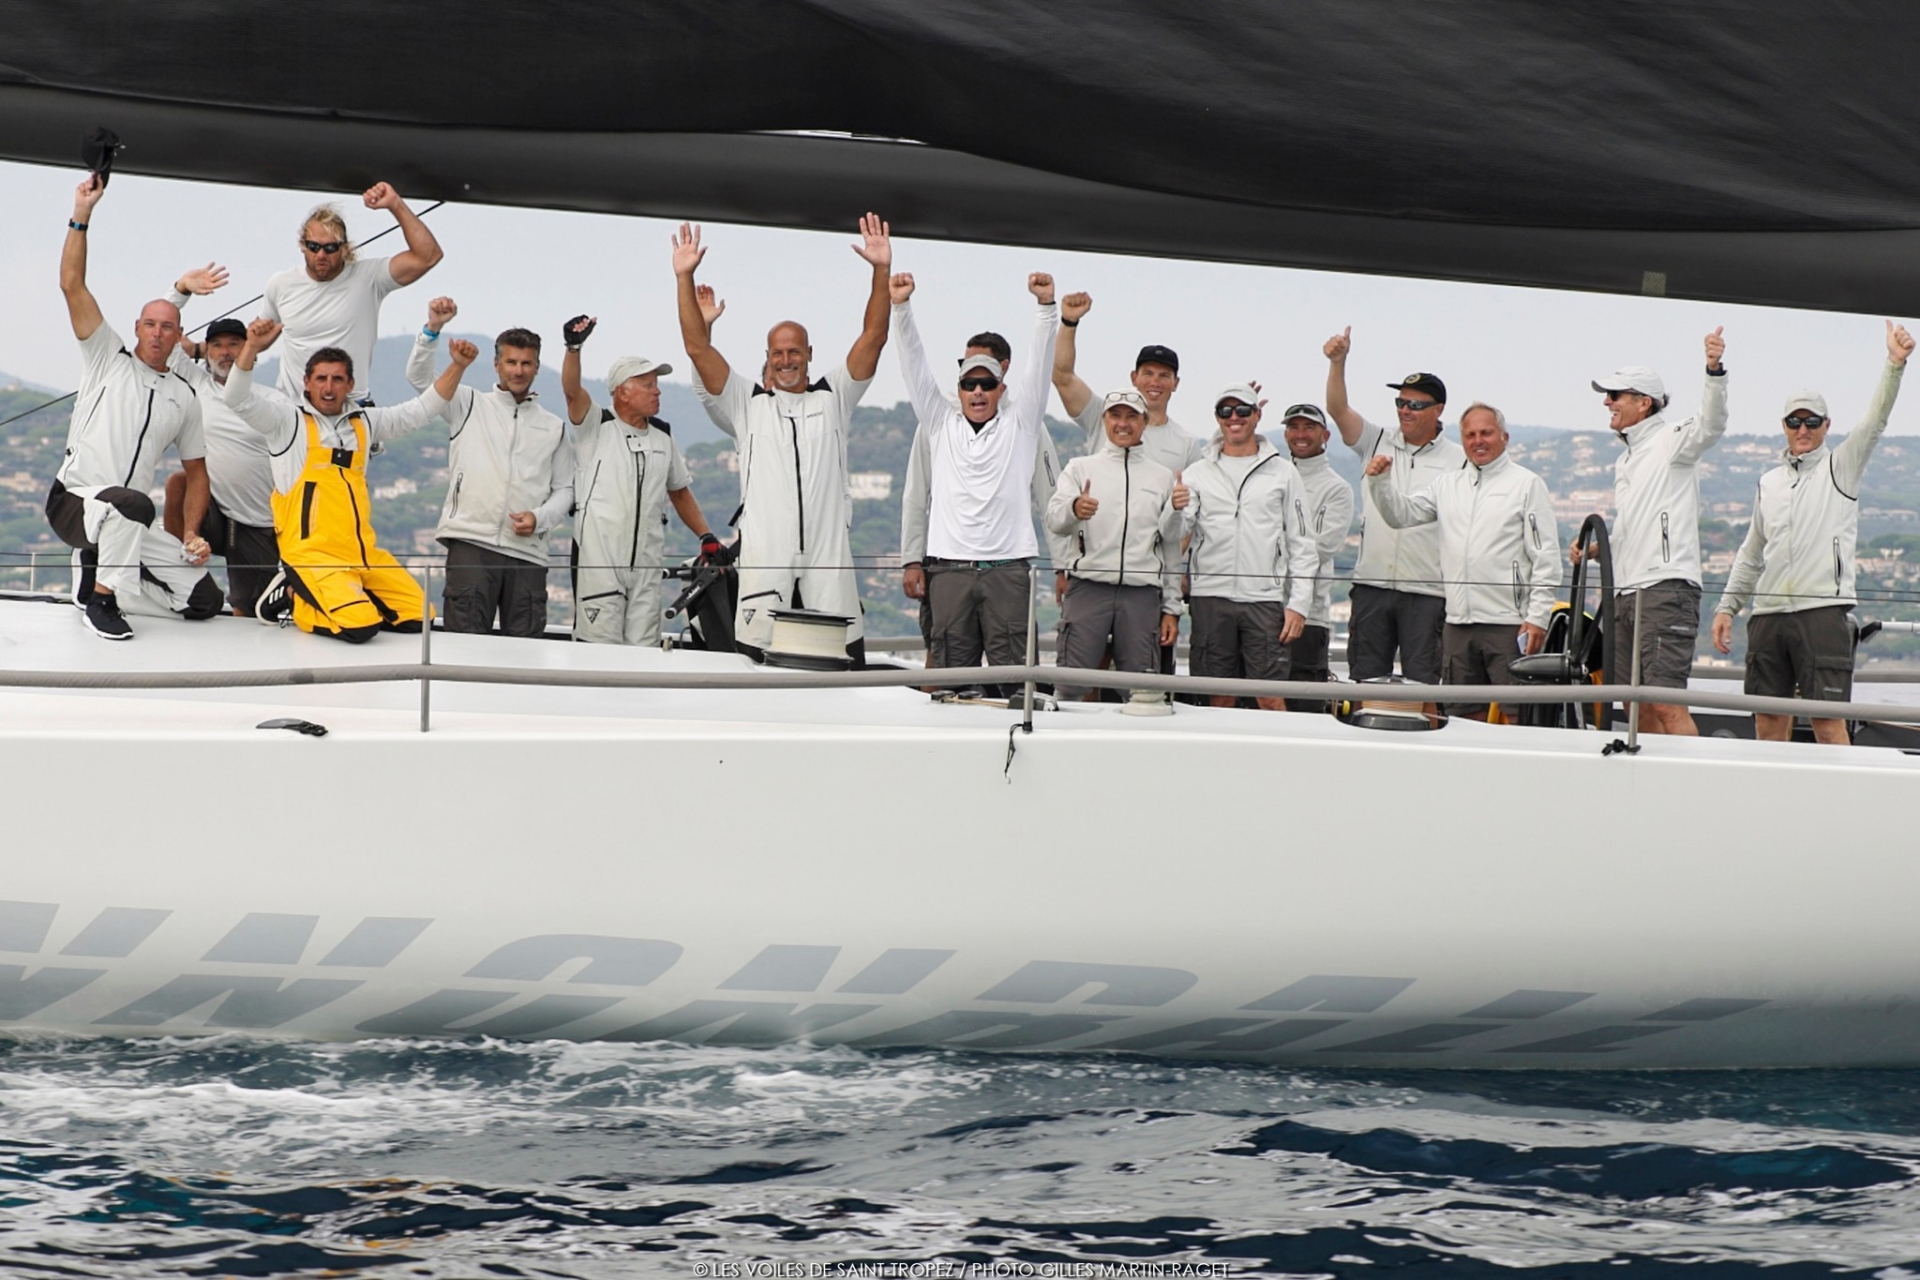 Les Voiles de Saint-Tropez: Cannonball, owned by YCCS member Dario Ferrari wins in the Maxi 2 - NEWS - Yacht Club Costa Smeralda